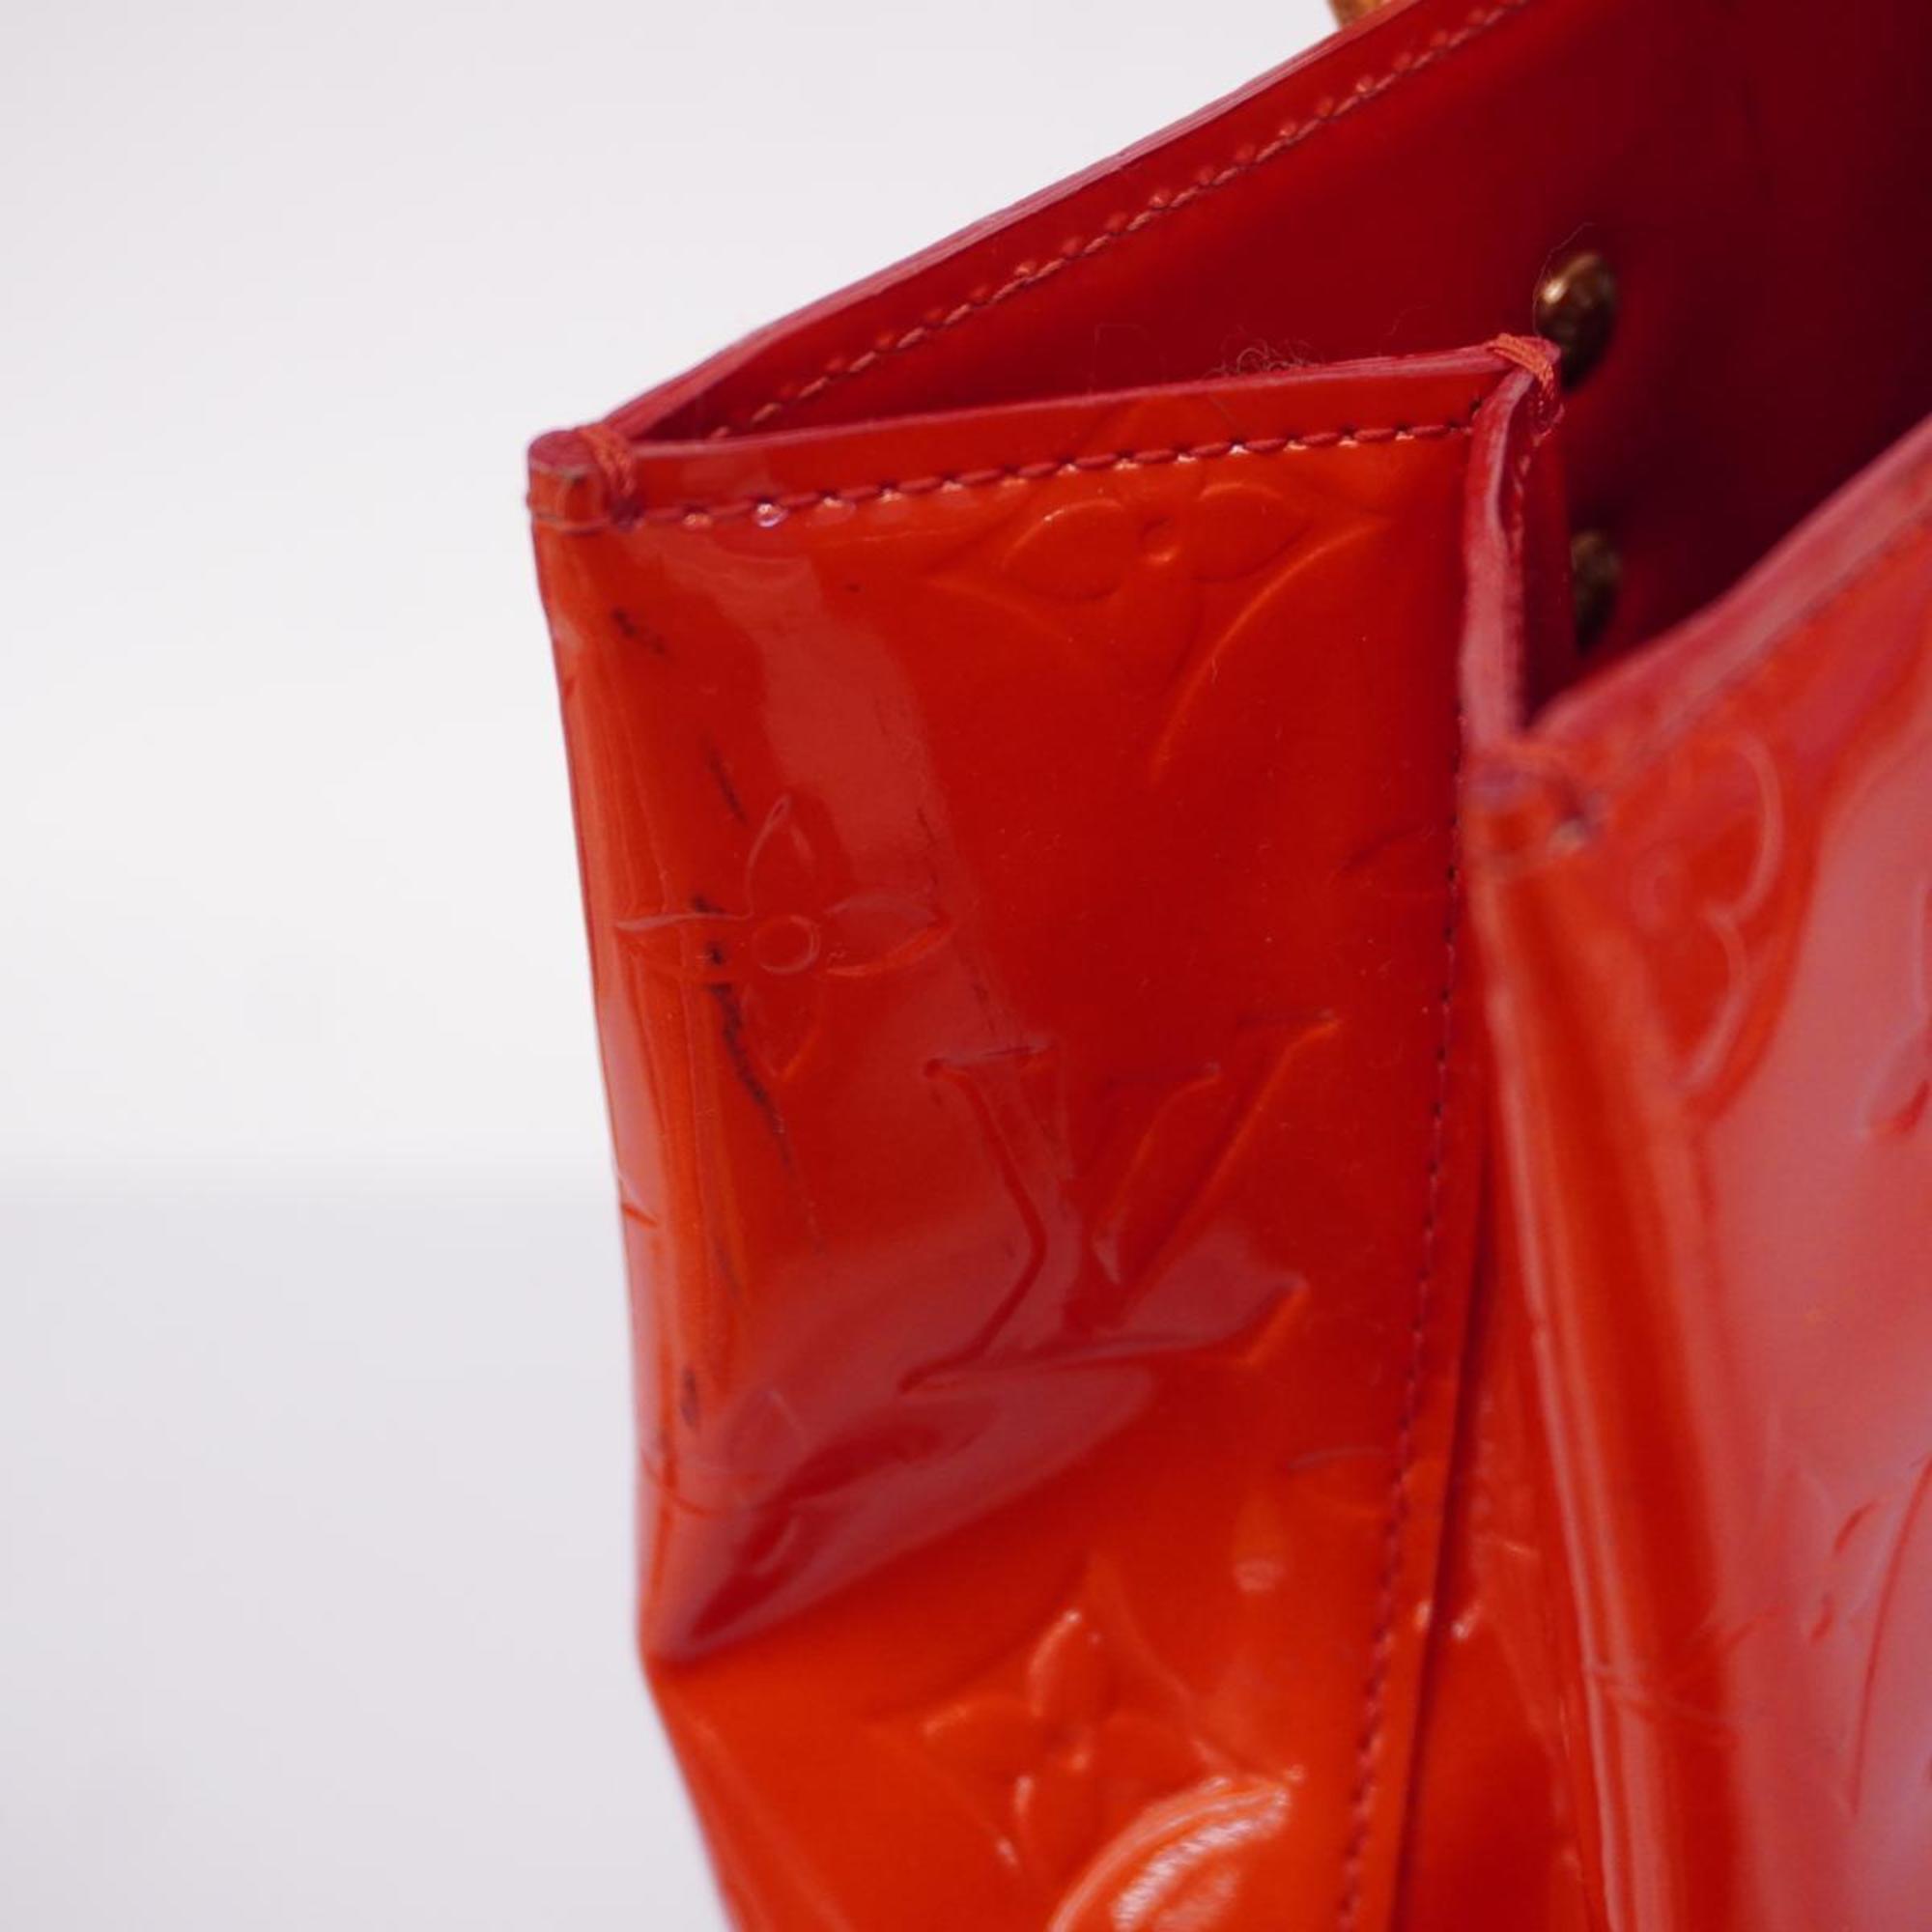 Louis Vuitton Tote Bag Vernis Reed MM M91086 Rouge Ladies